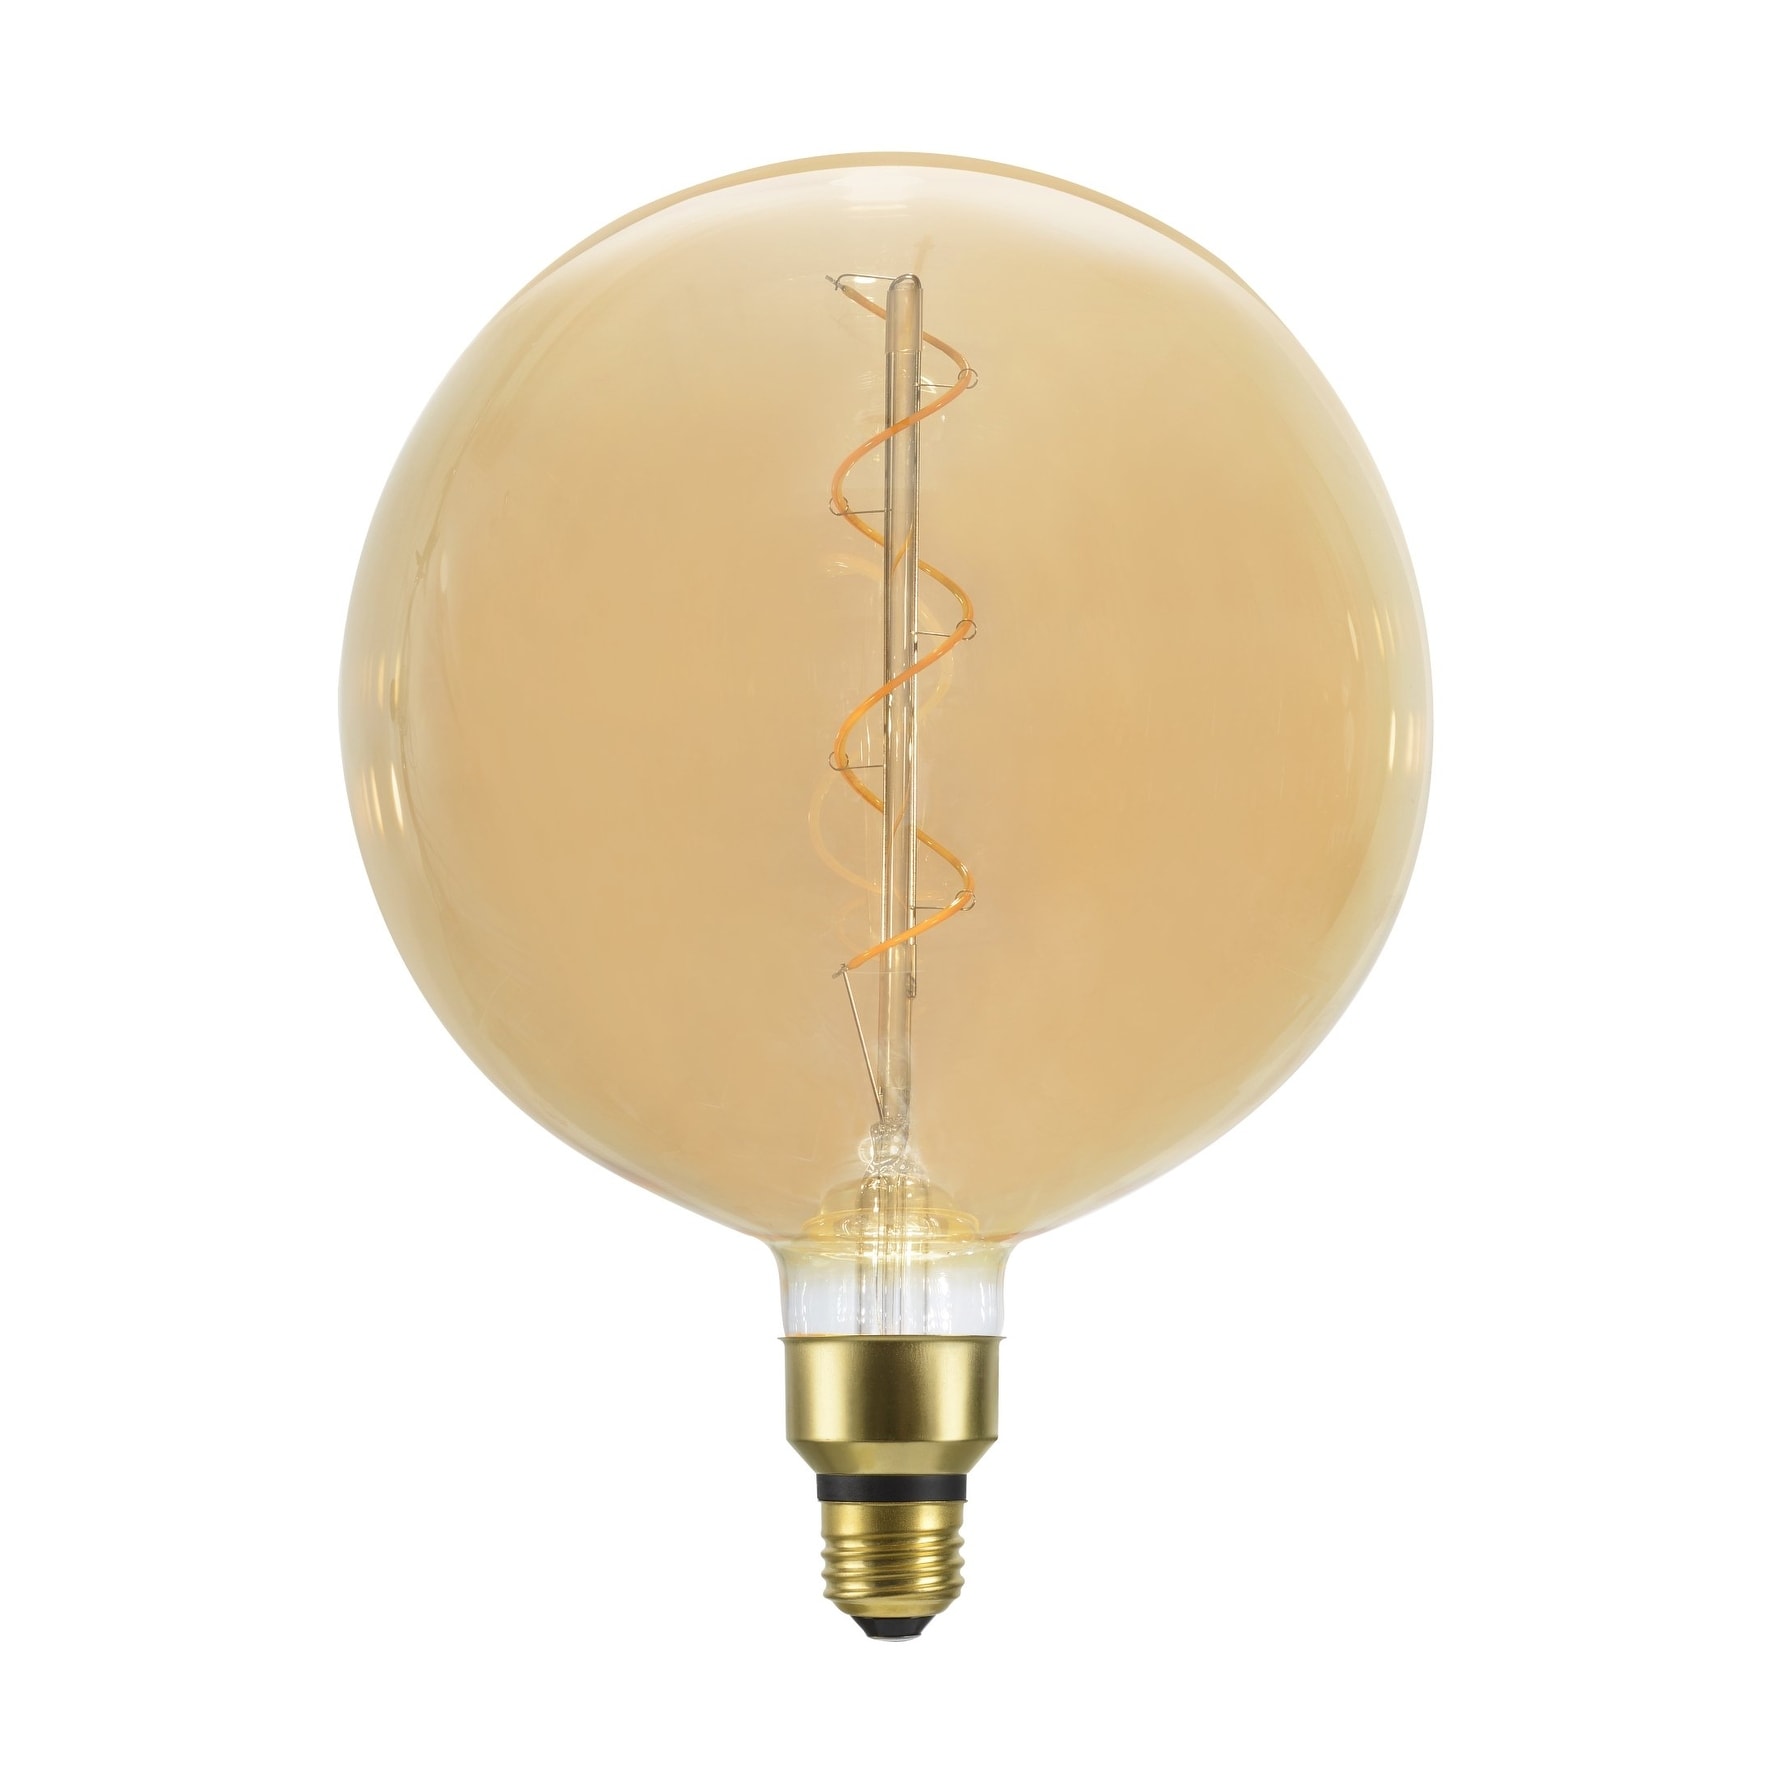 Aspen M200F5 Medium Size E26 Edison Antique Vintage Oversize 60W 160 lm Light Bulb with 3000 hrs of Life TIAB INC 